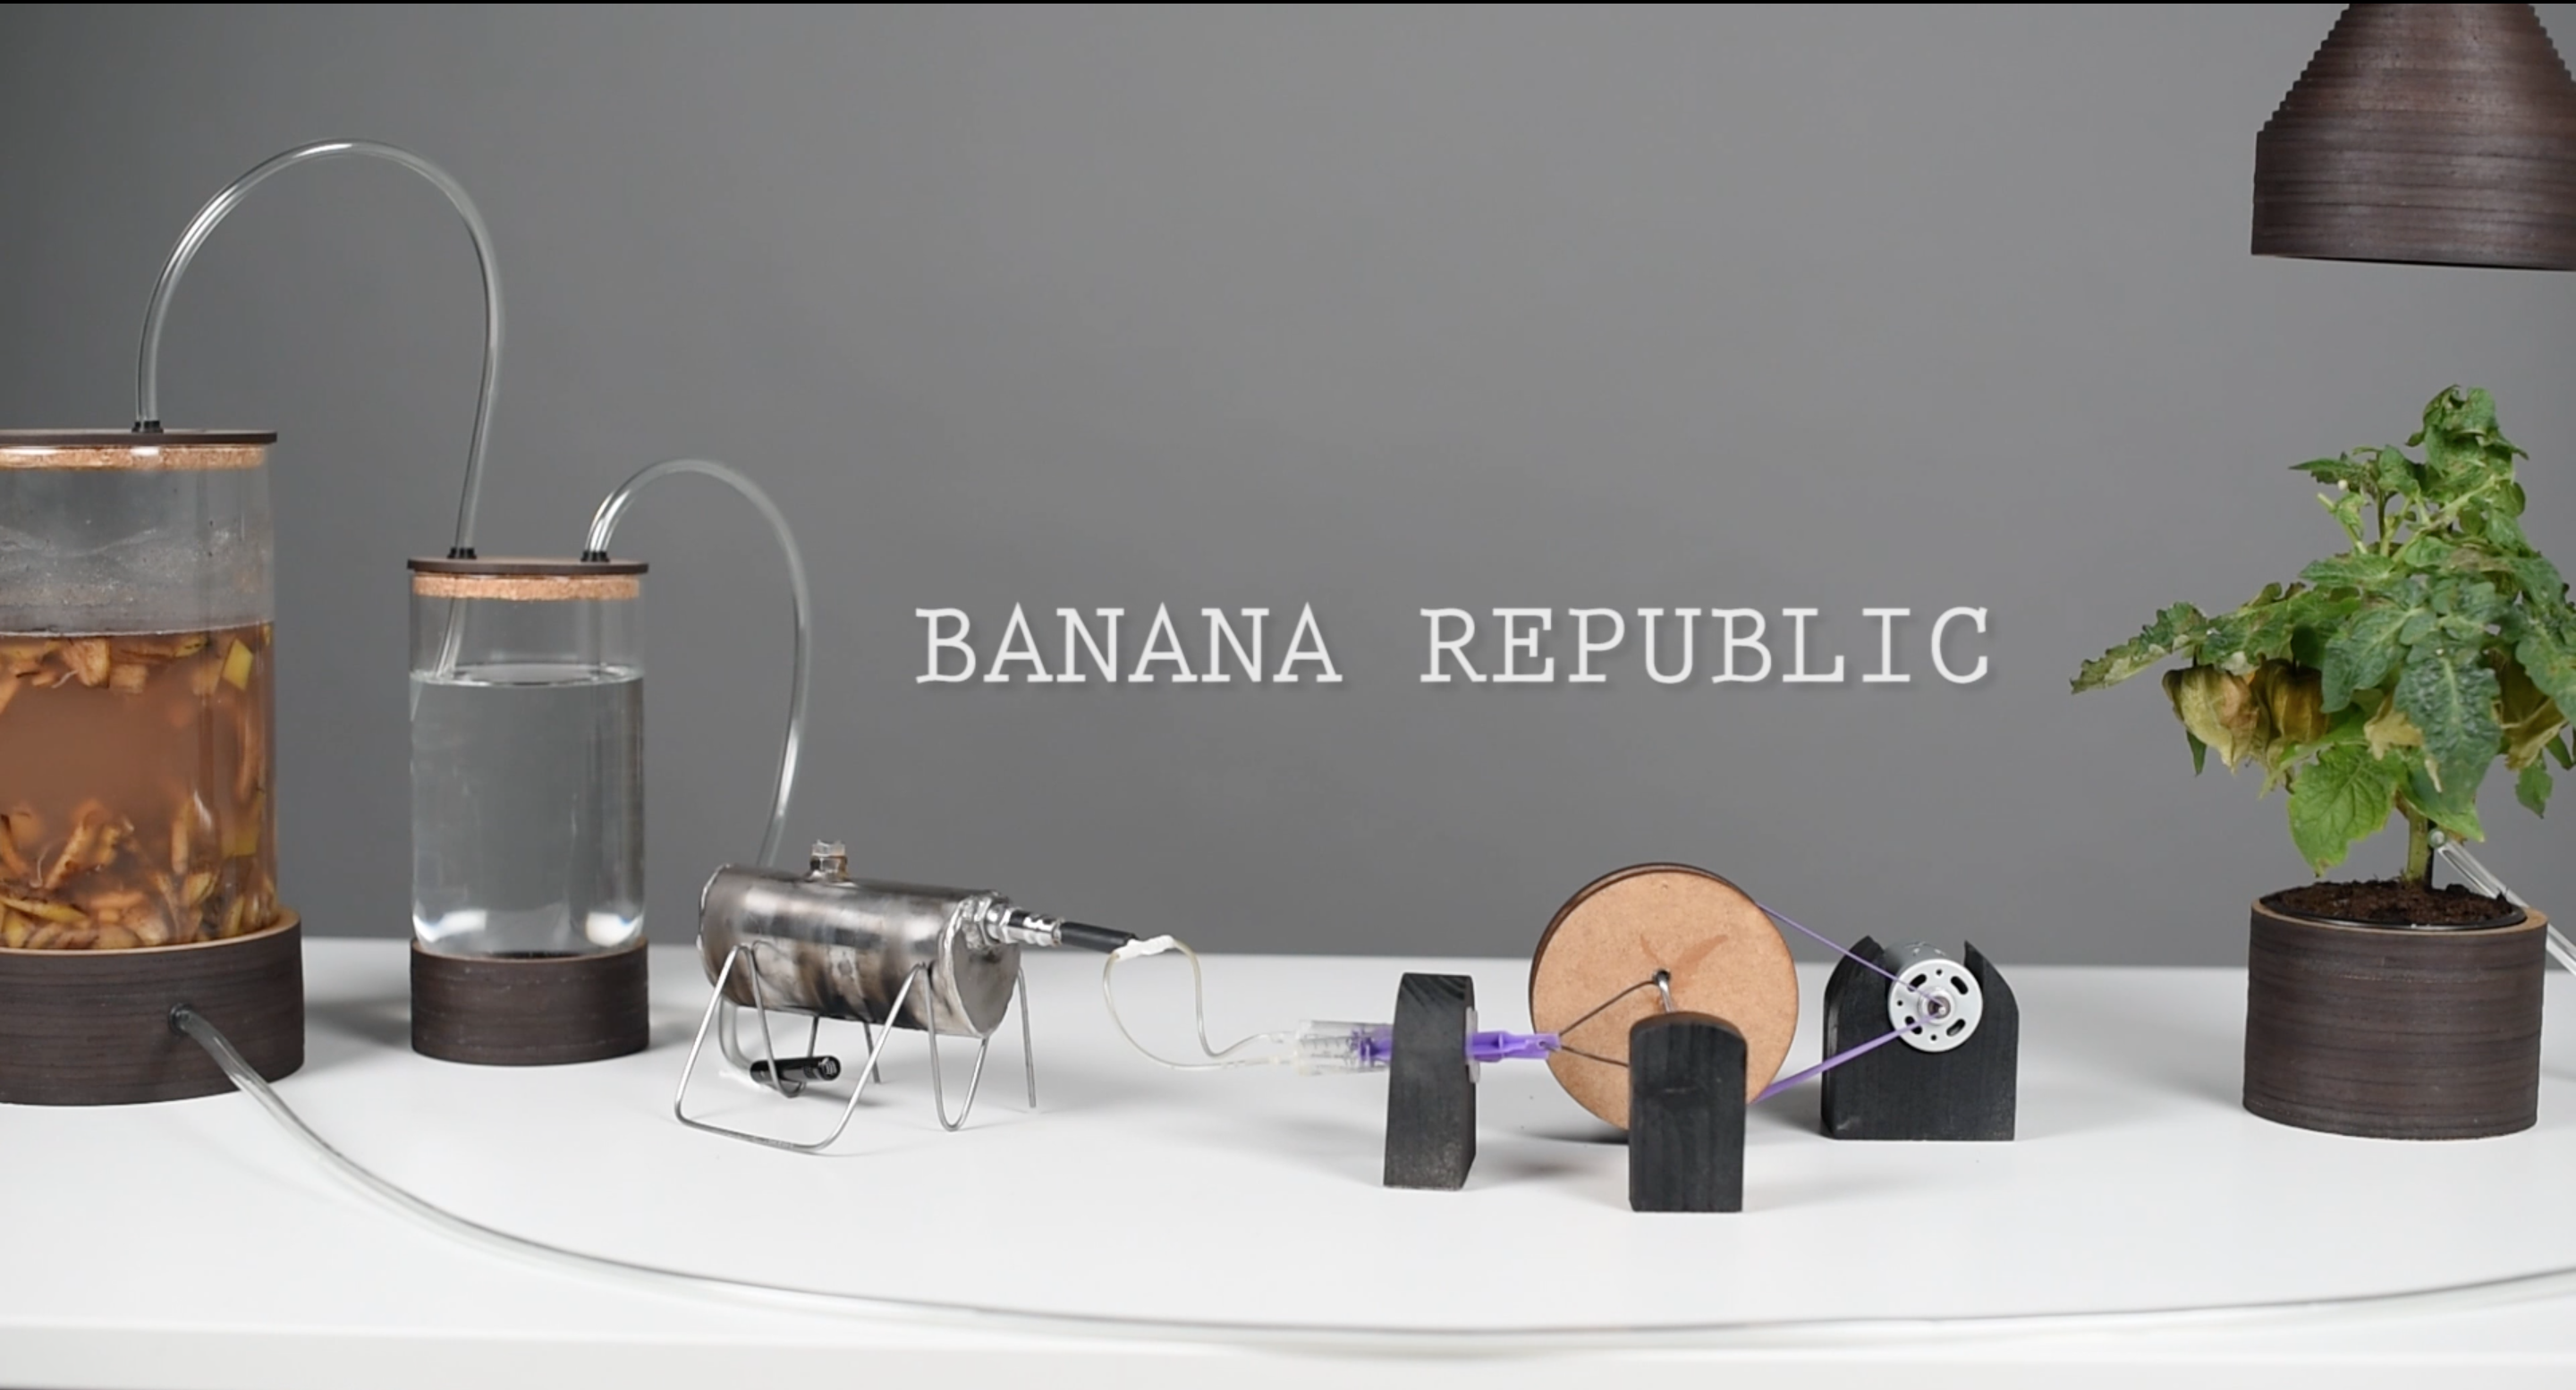 Banana Republic, still frame from a video